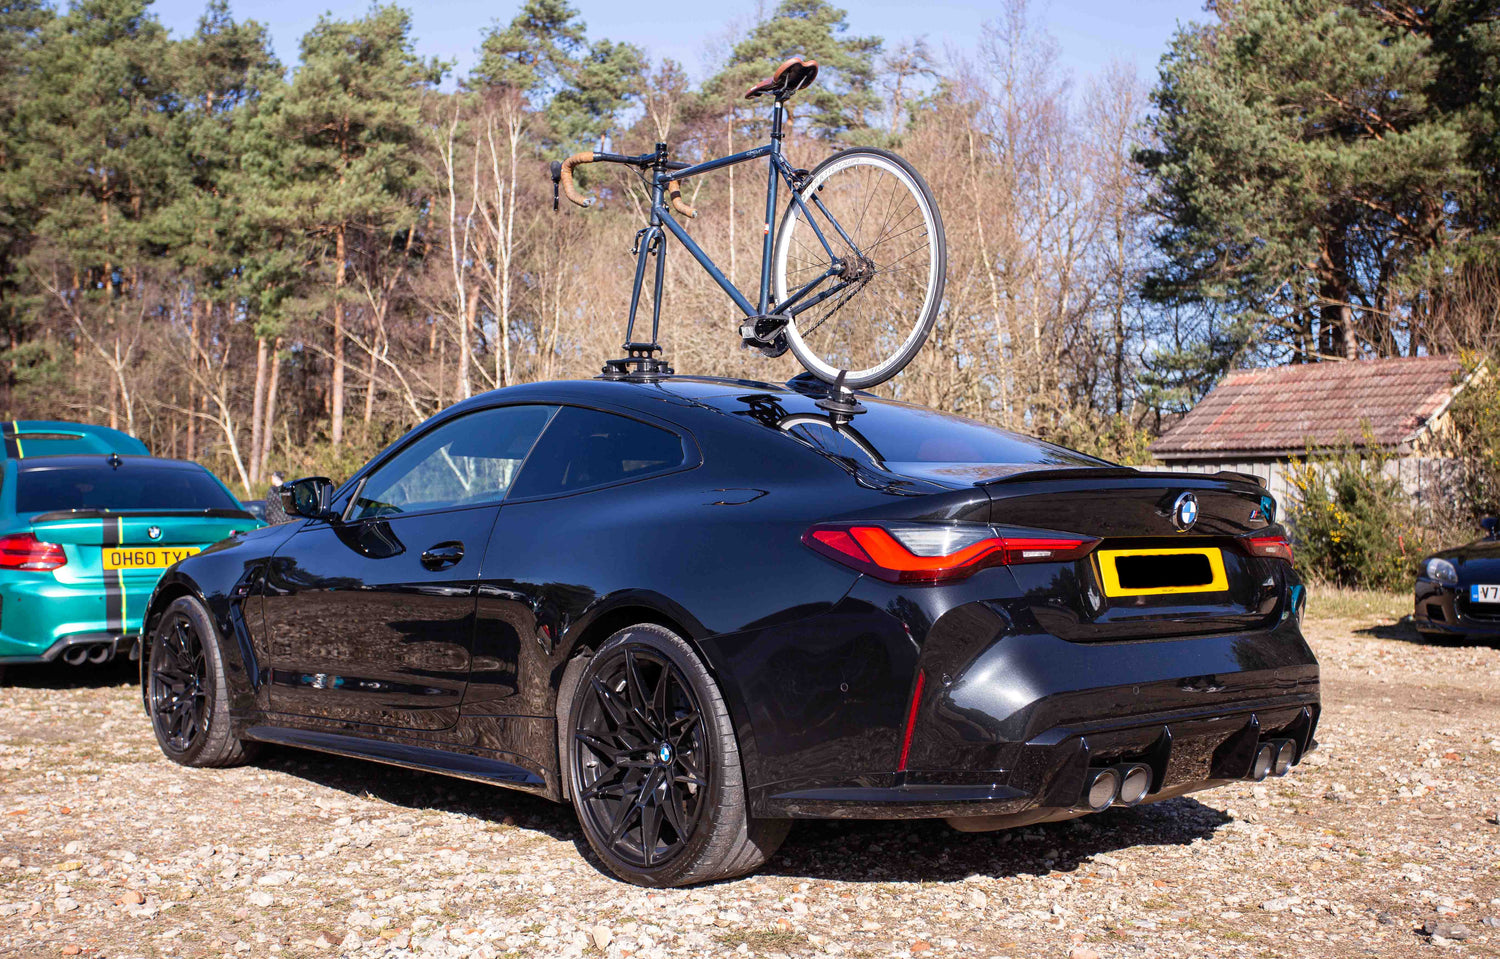 BMW Bike Racks/Carriers